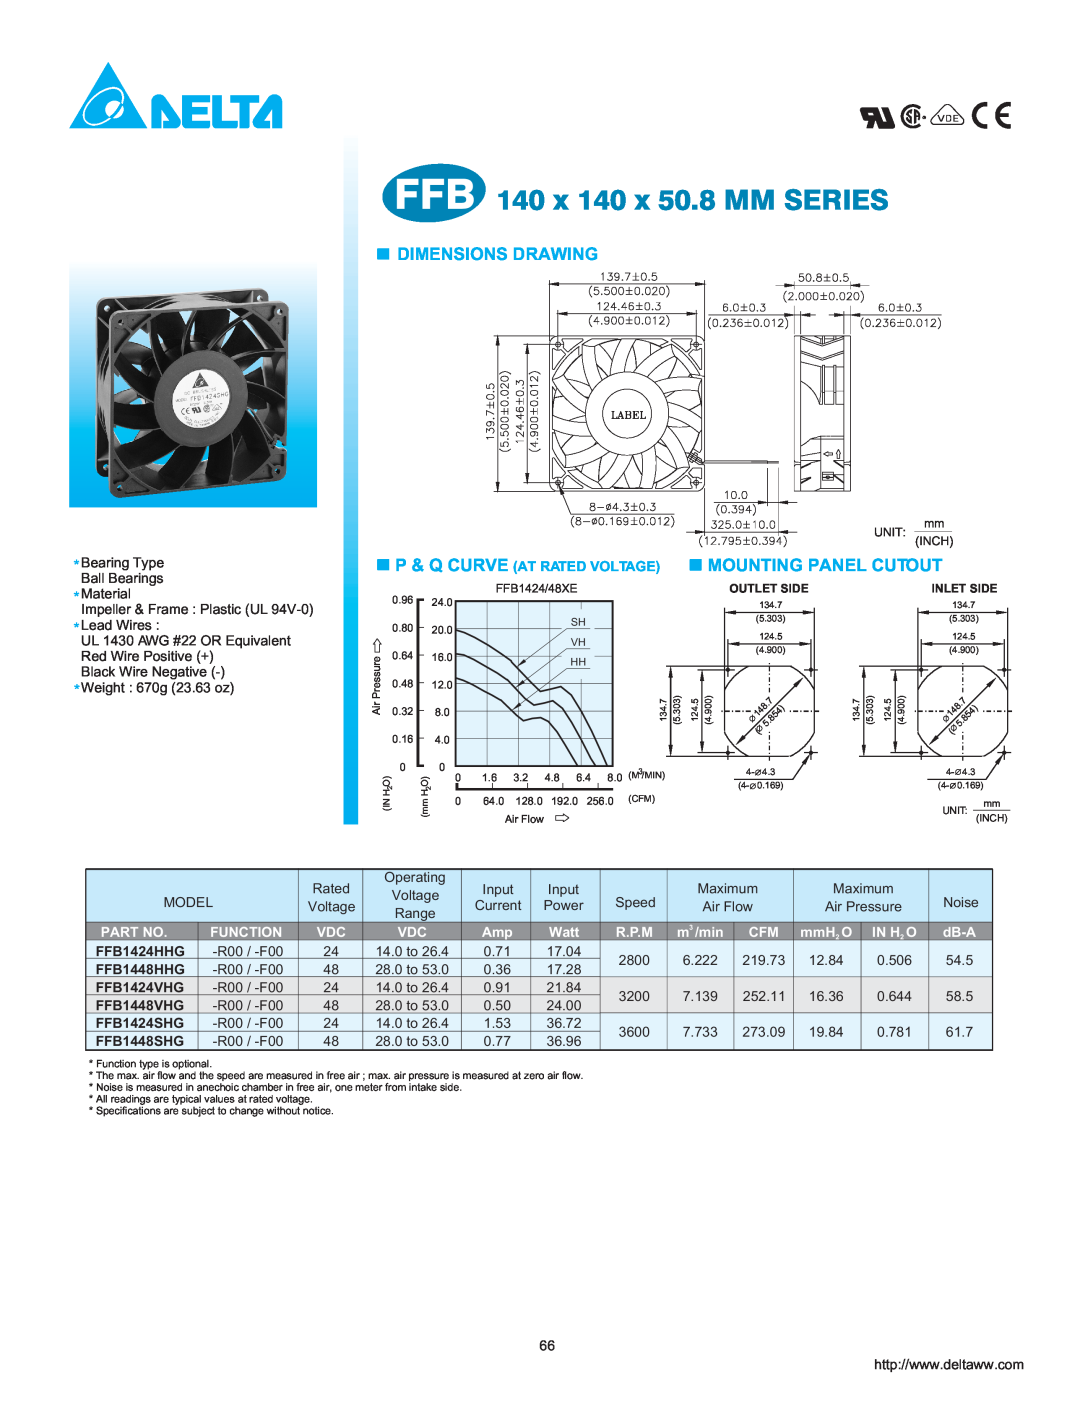 Delta Electronics FFB Series dimensions FFB 140 x 140 x 50.8 MM SERIES, Dimensions Drawing, Mounting Panel Cutout, Watt 